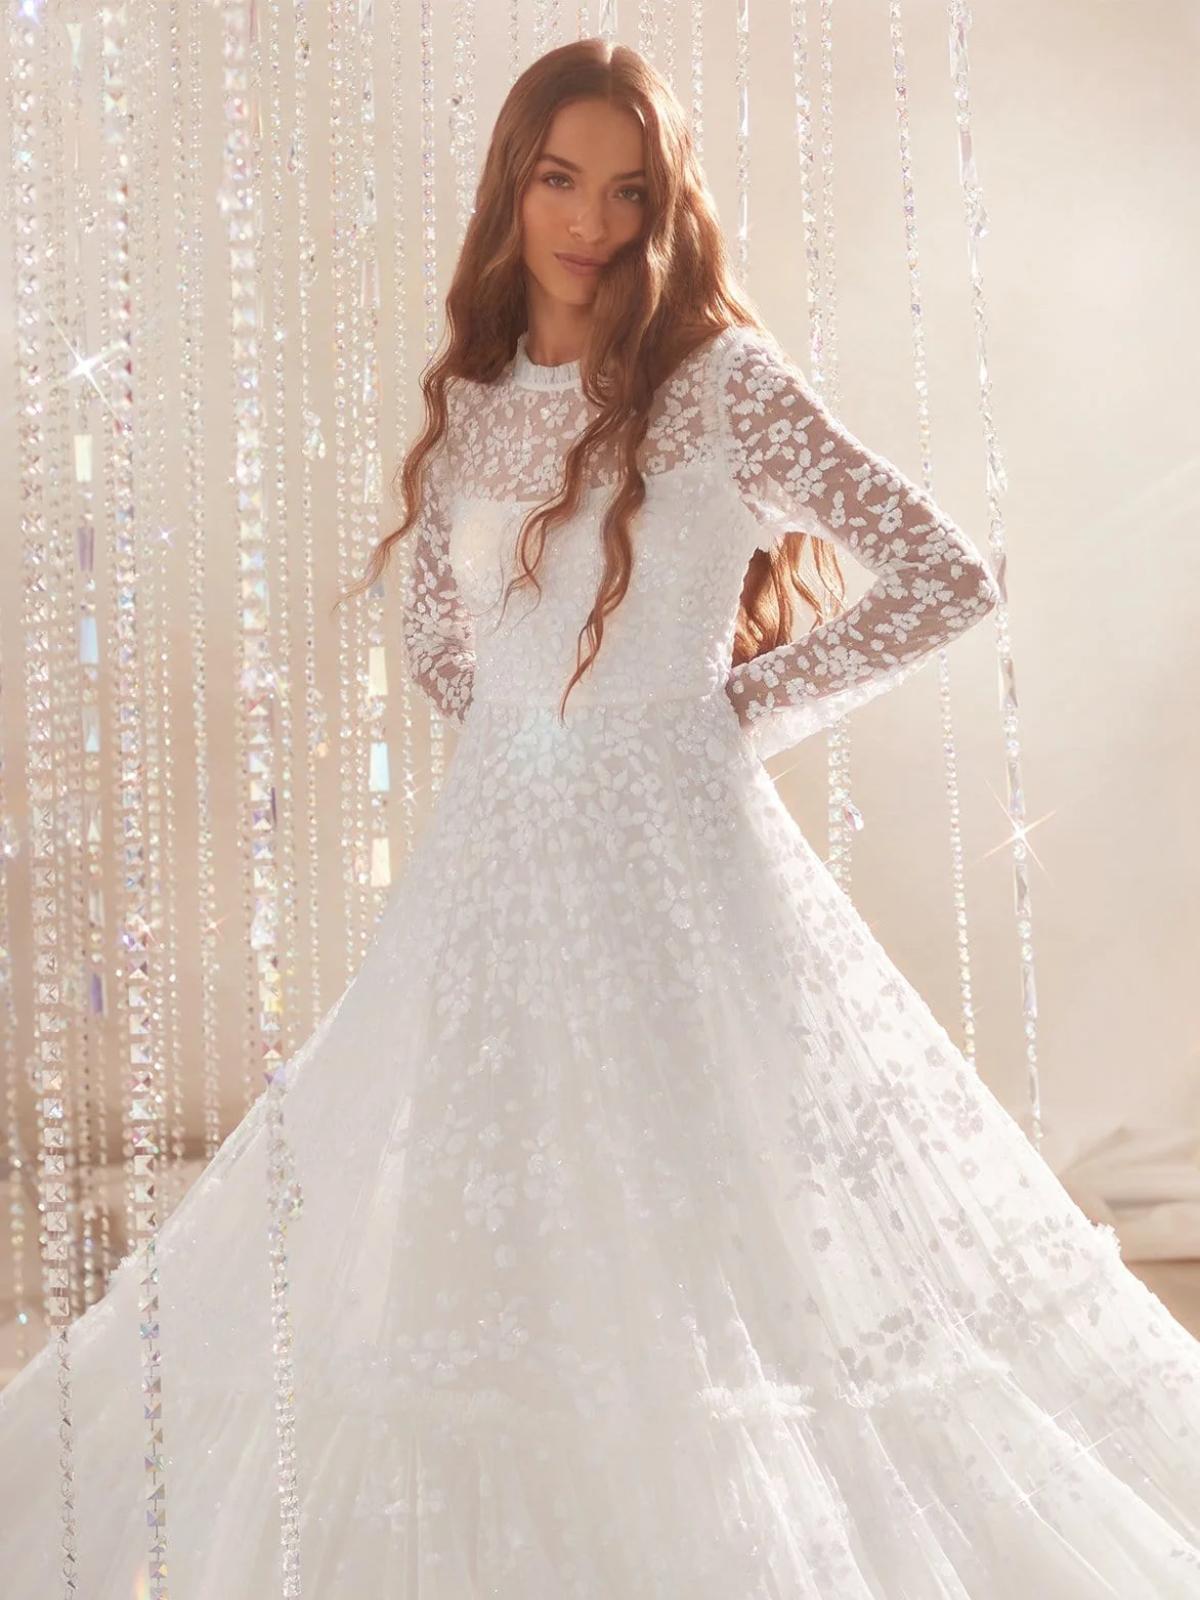 Shop For Your Perfect Wedding Dress Online | JJ's House-mncb.edu.vn